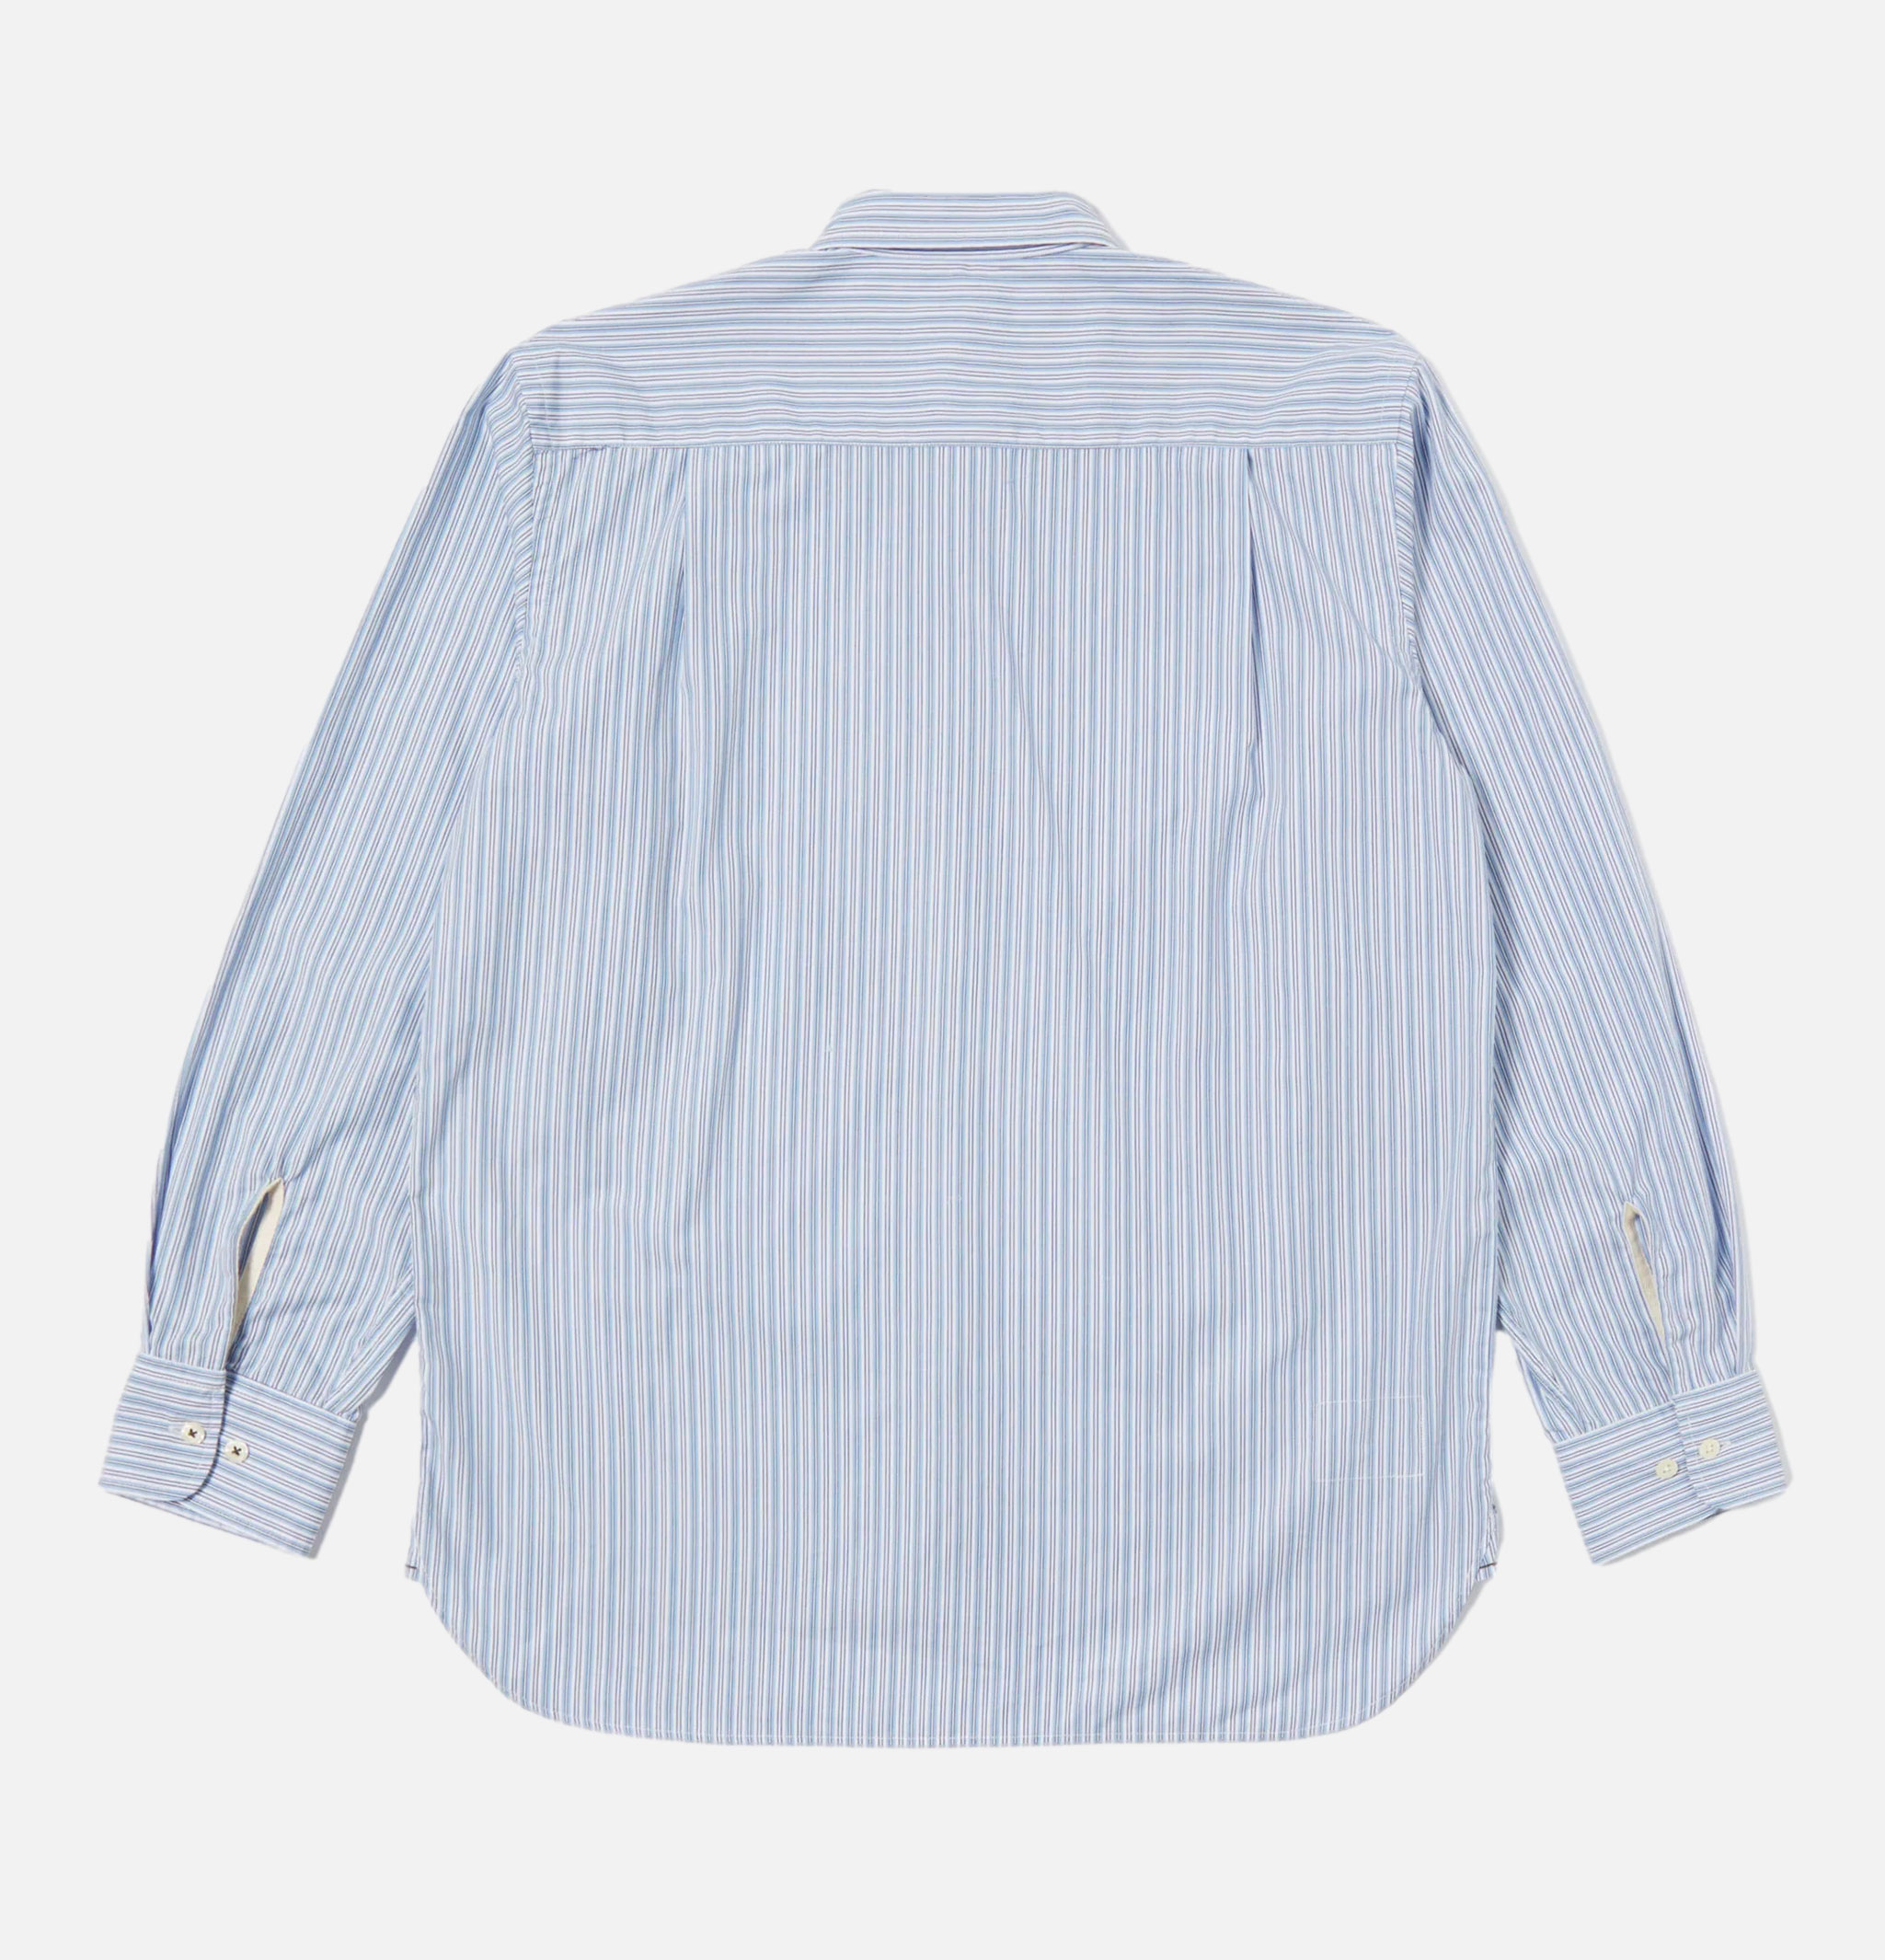 Universal Works Square Pocket Shirt In Blue/Orange Busy Stripe Cotton